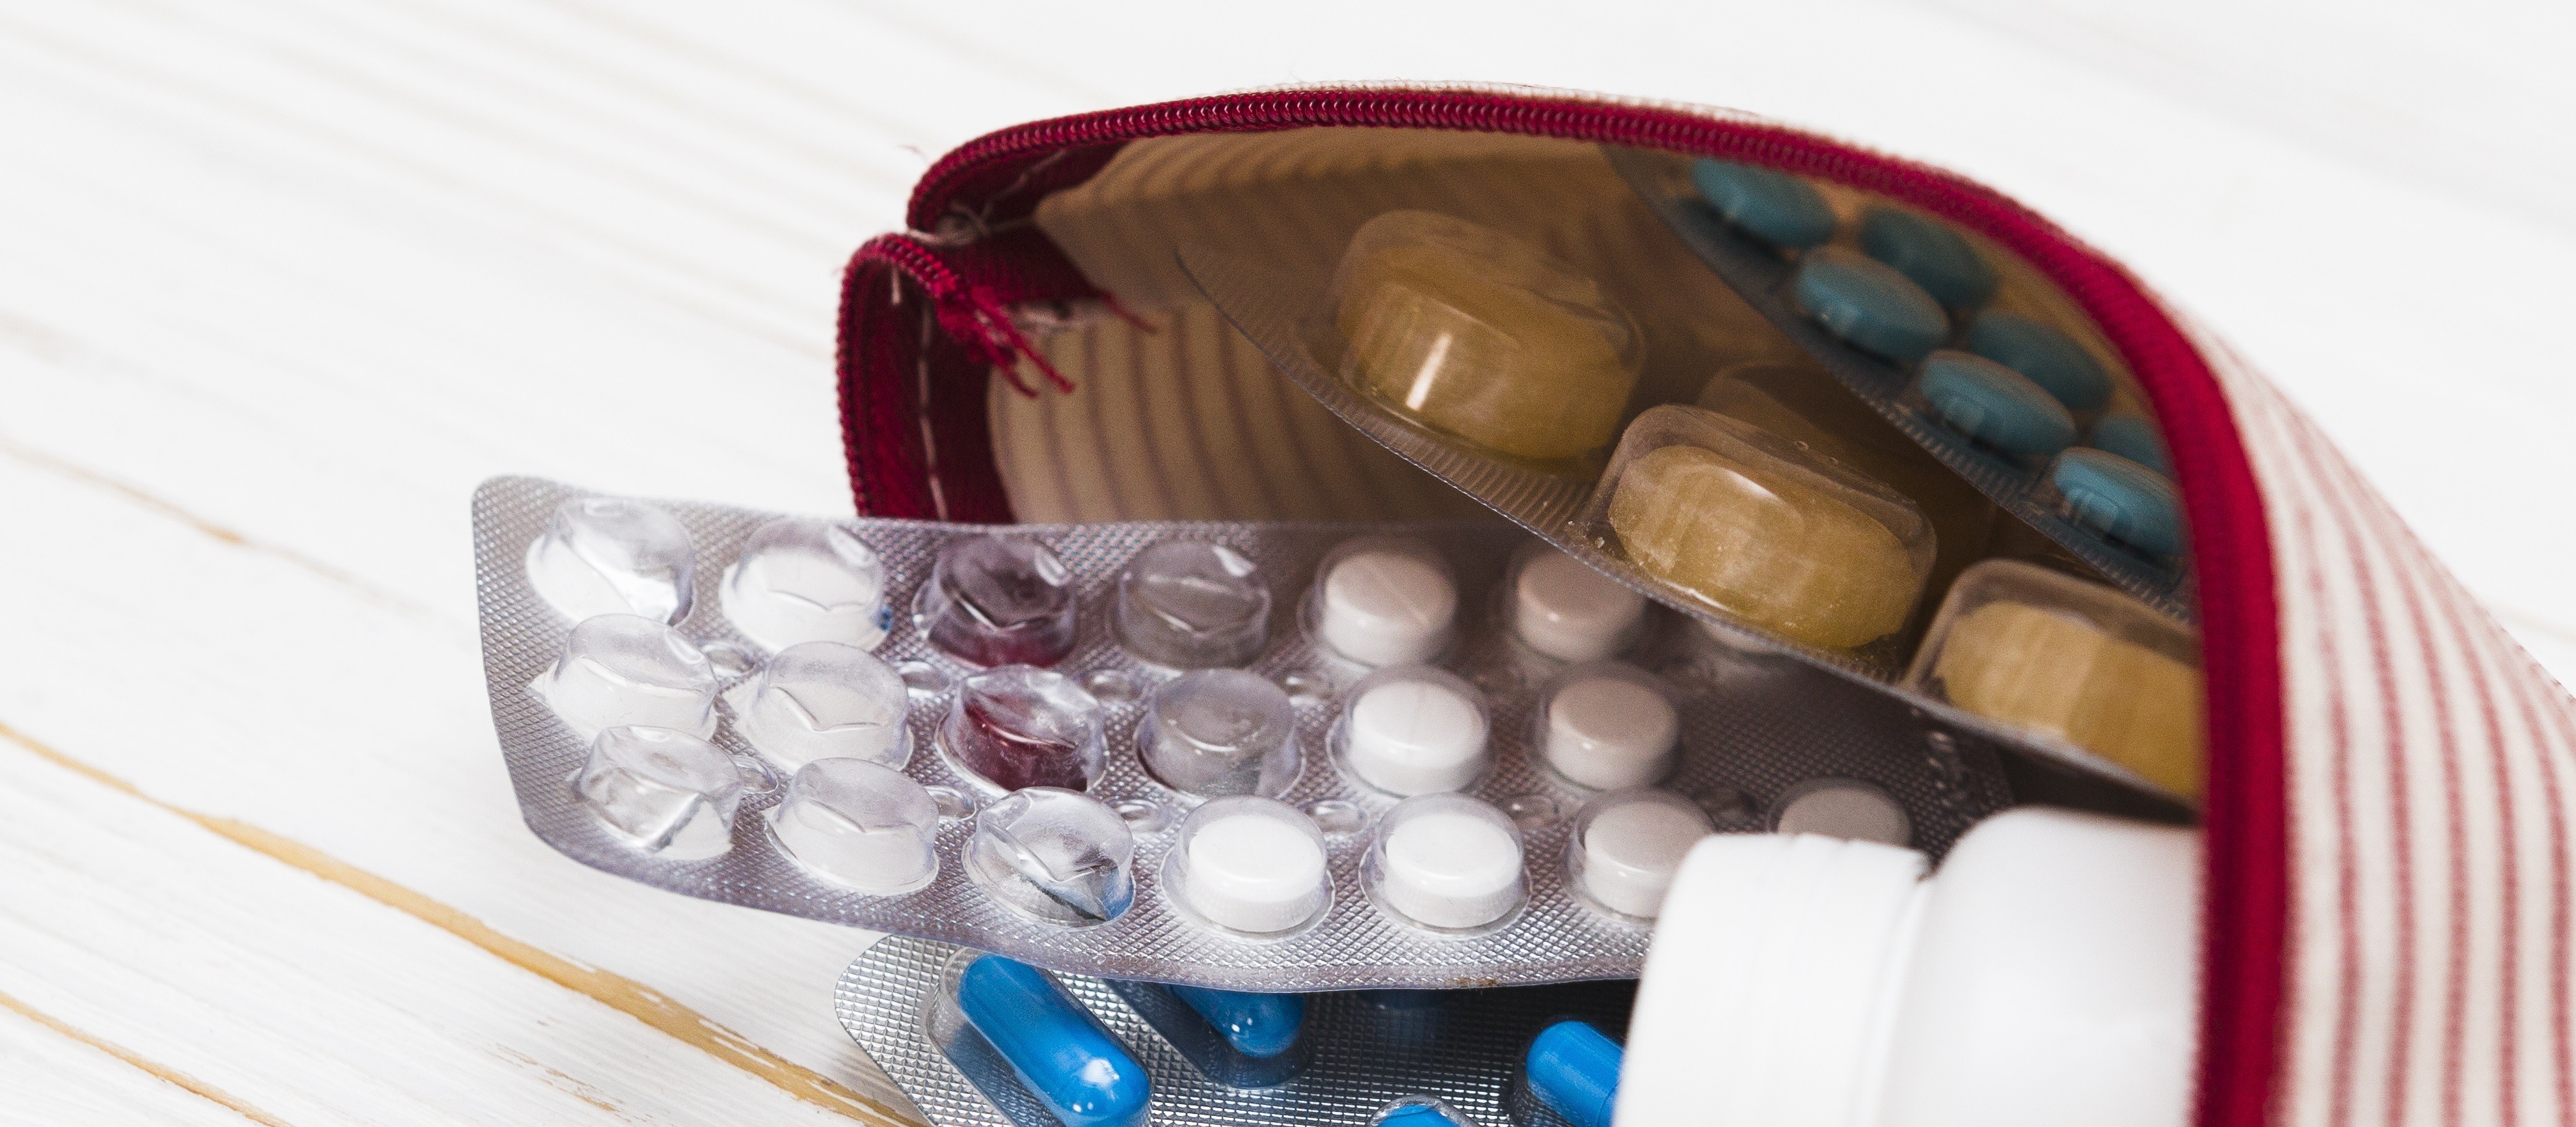 Como transportar medicamentos corretamente durante viagens? 